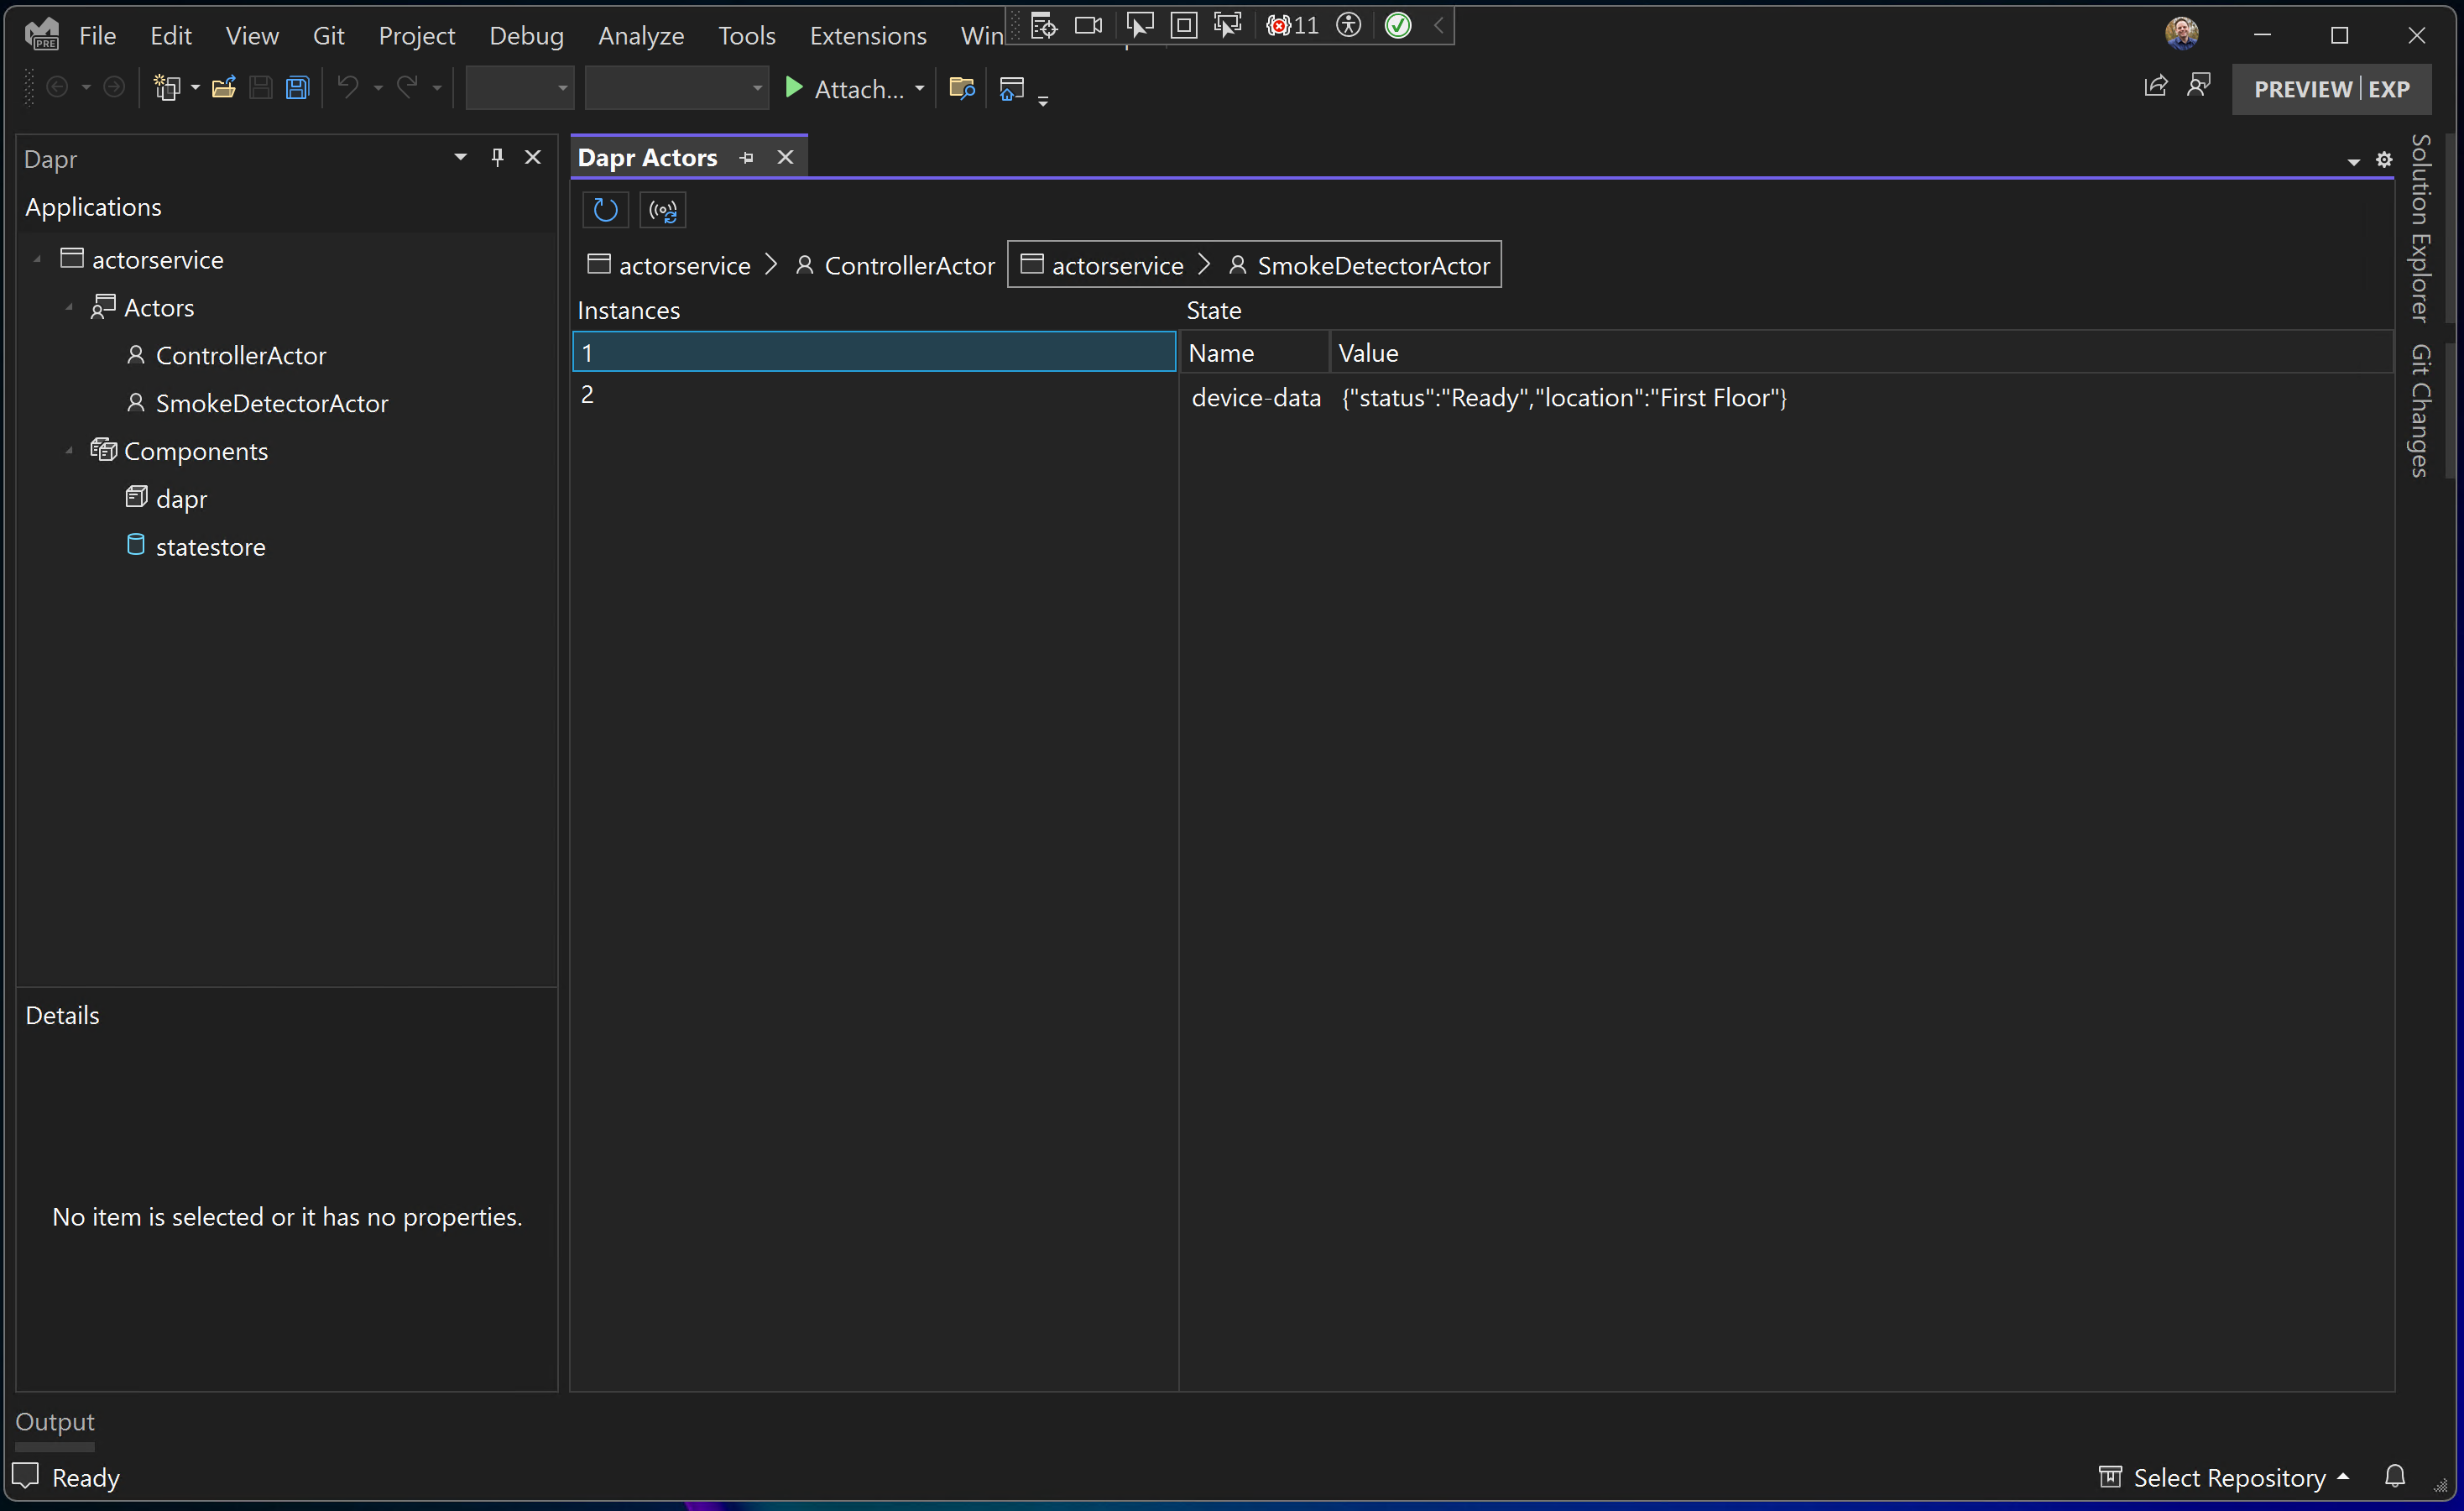 Screenshot of Visual Studio with the Dapr and Dapr Actors tool windows open